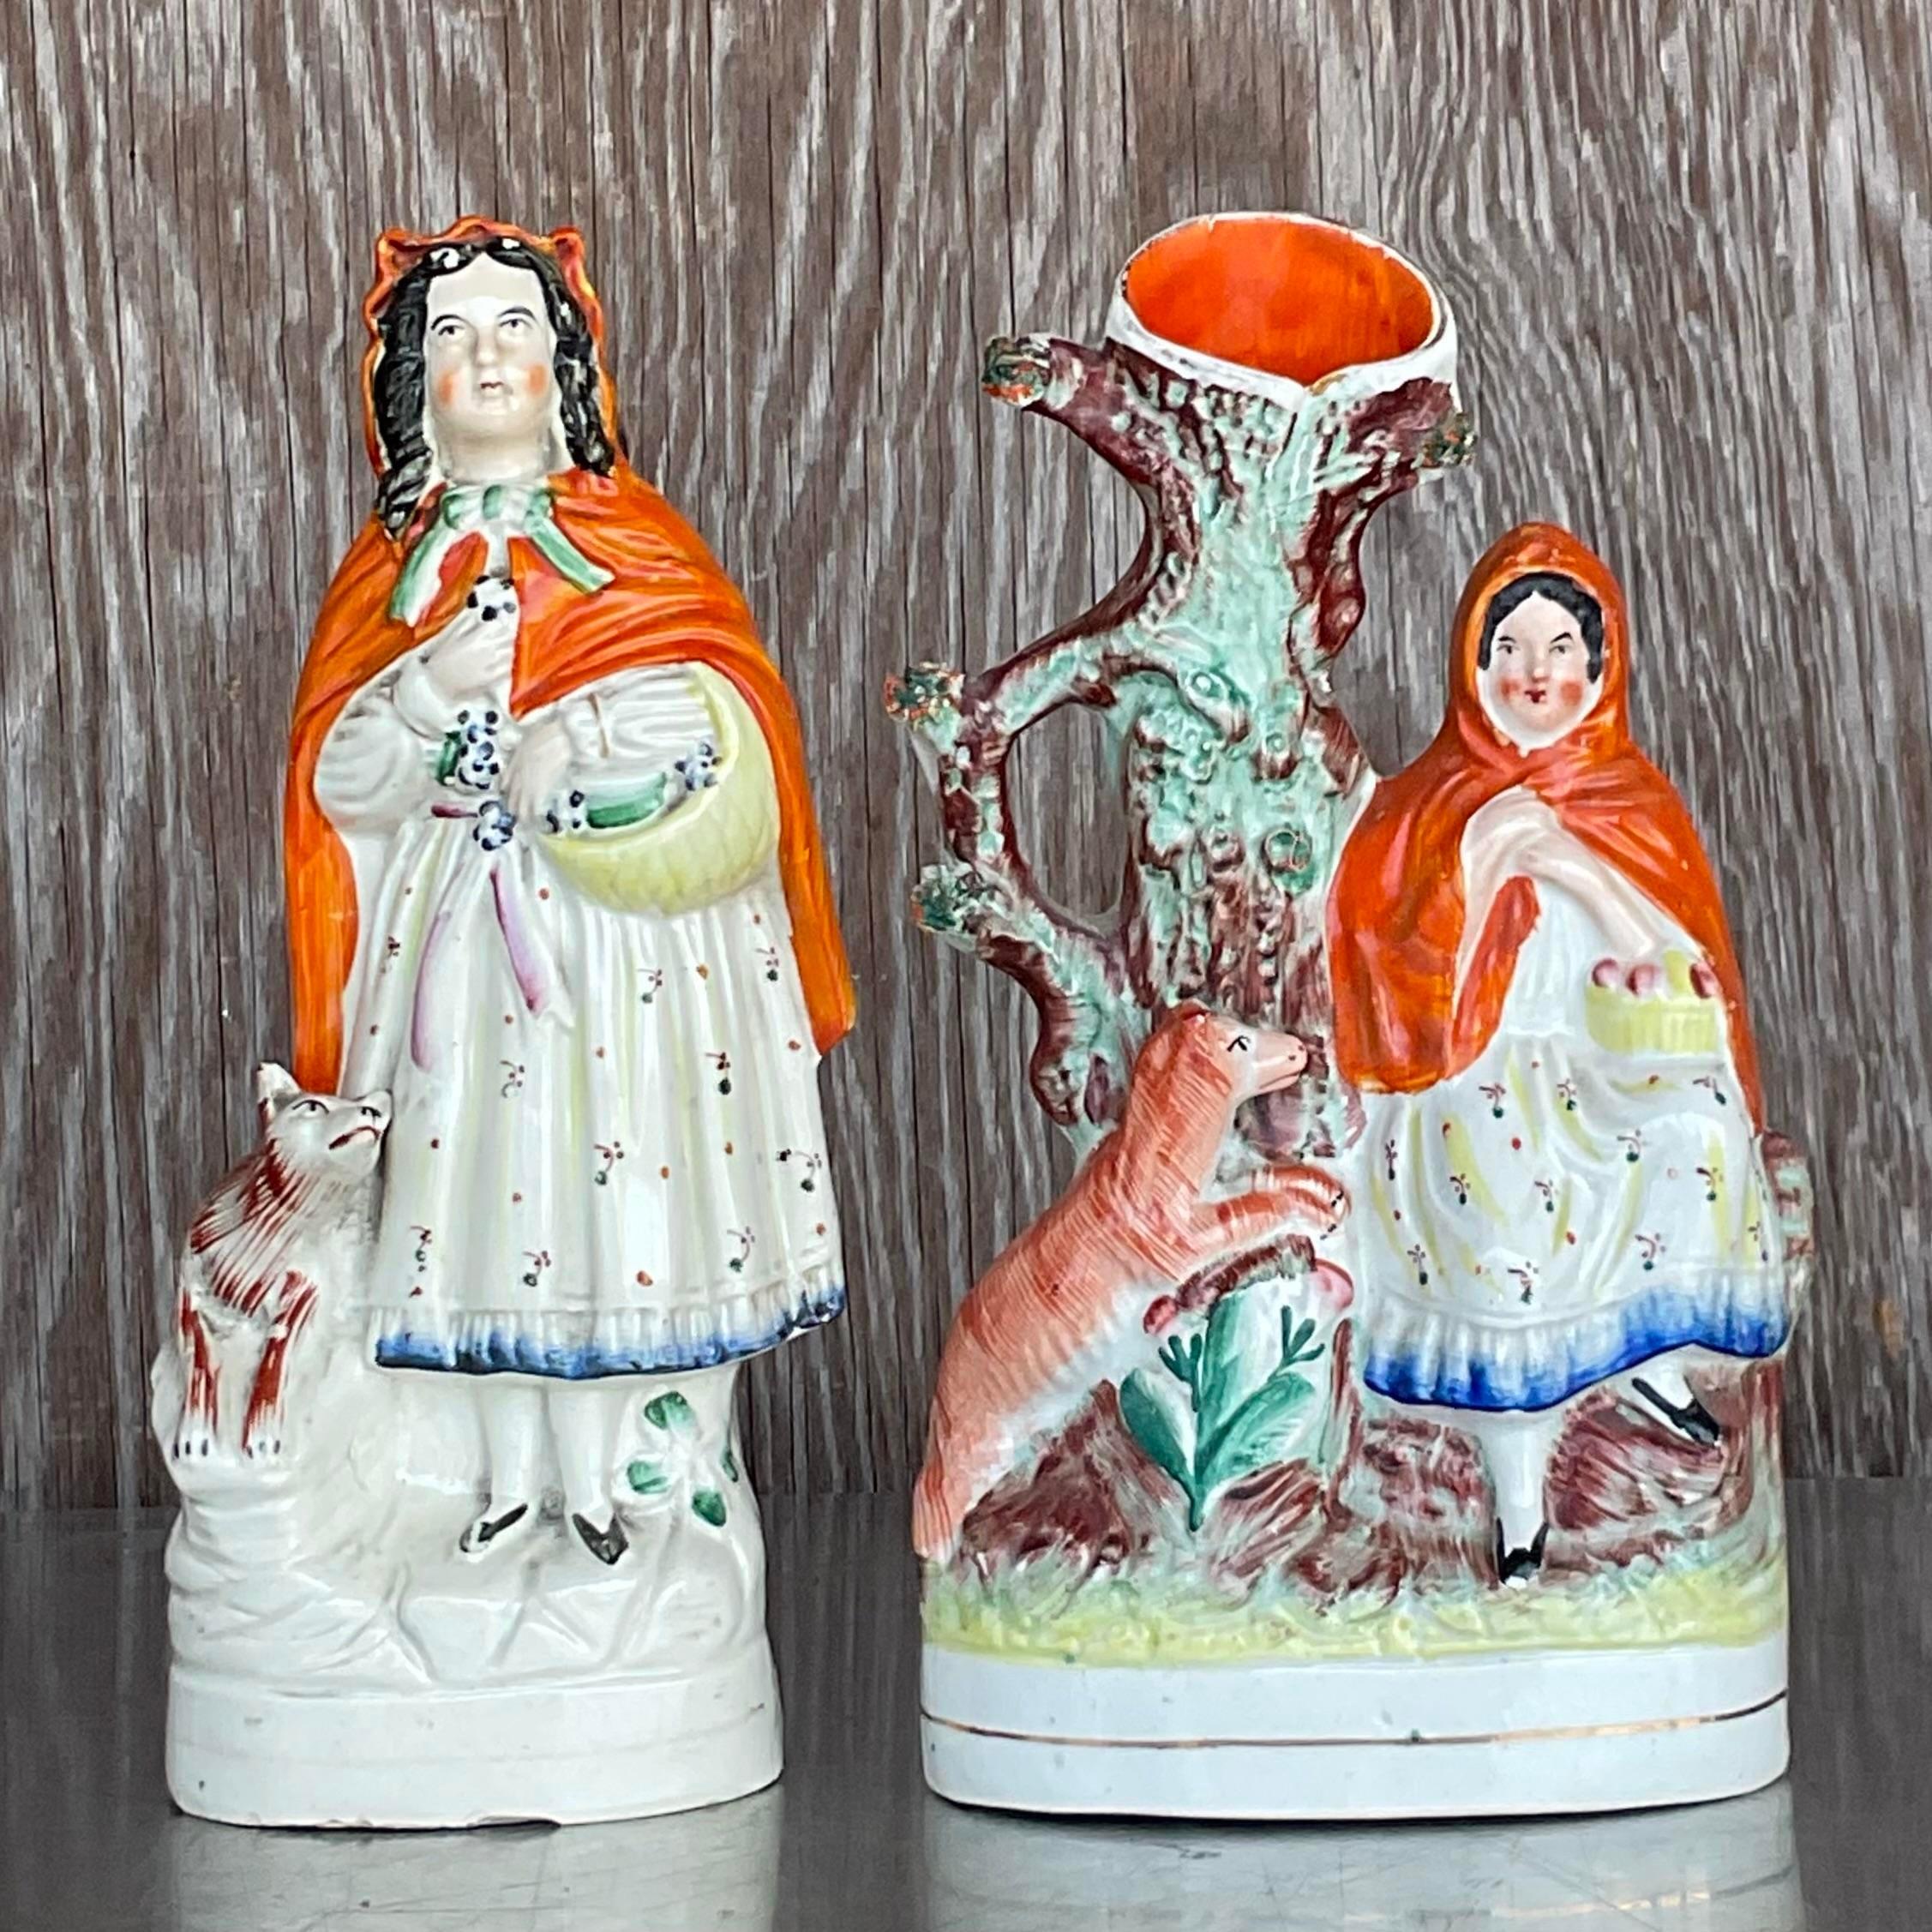 British Vintage Regency Staffordshire Style Figurines - Set of 2 For Sale